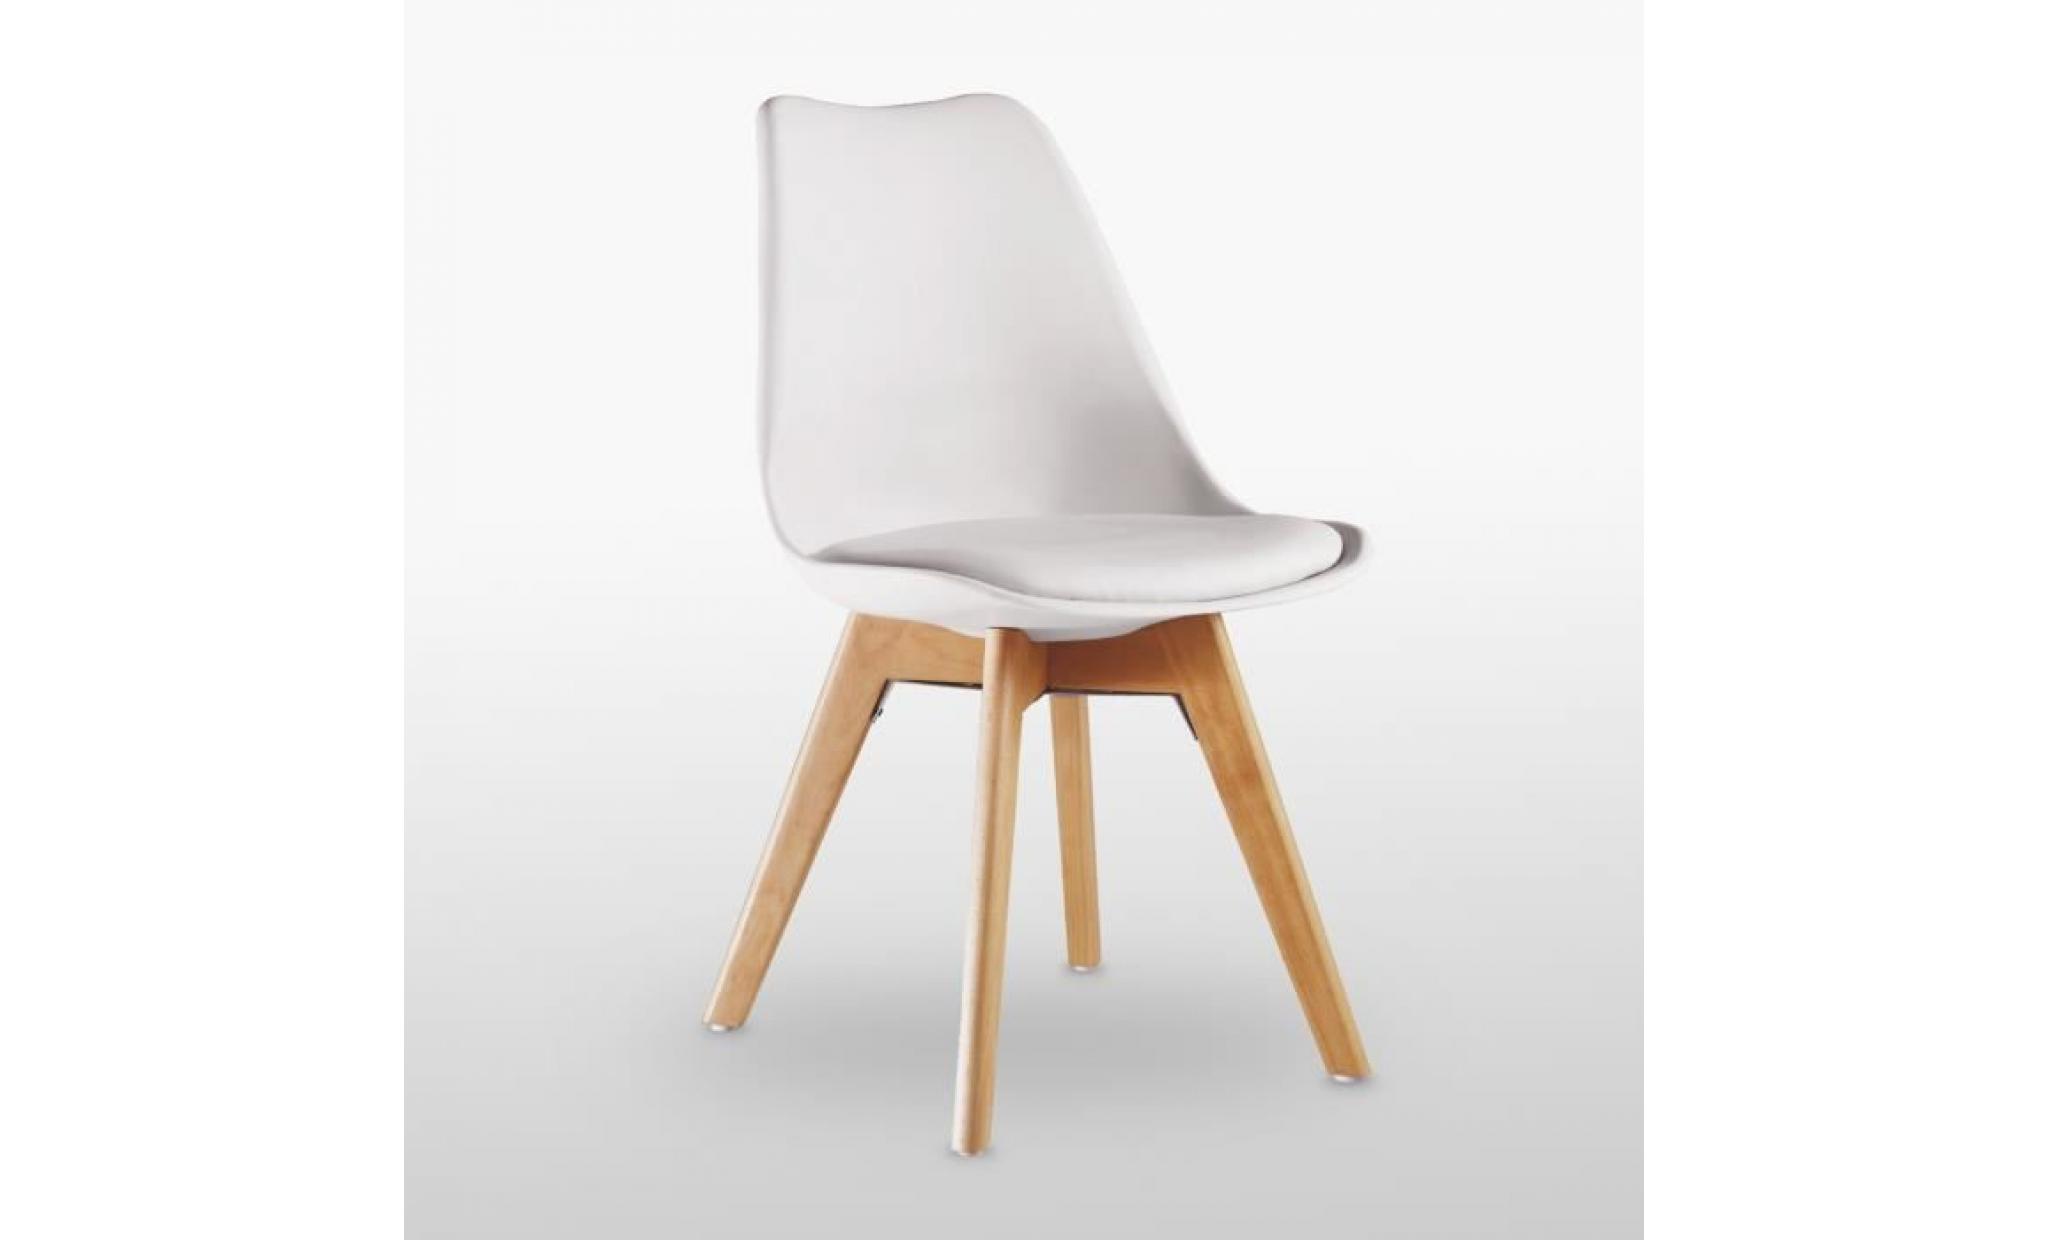 ensemble salle à manger moderne lorenzo   table blanche + 4 chaises blanches   design scandinave pas cher